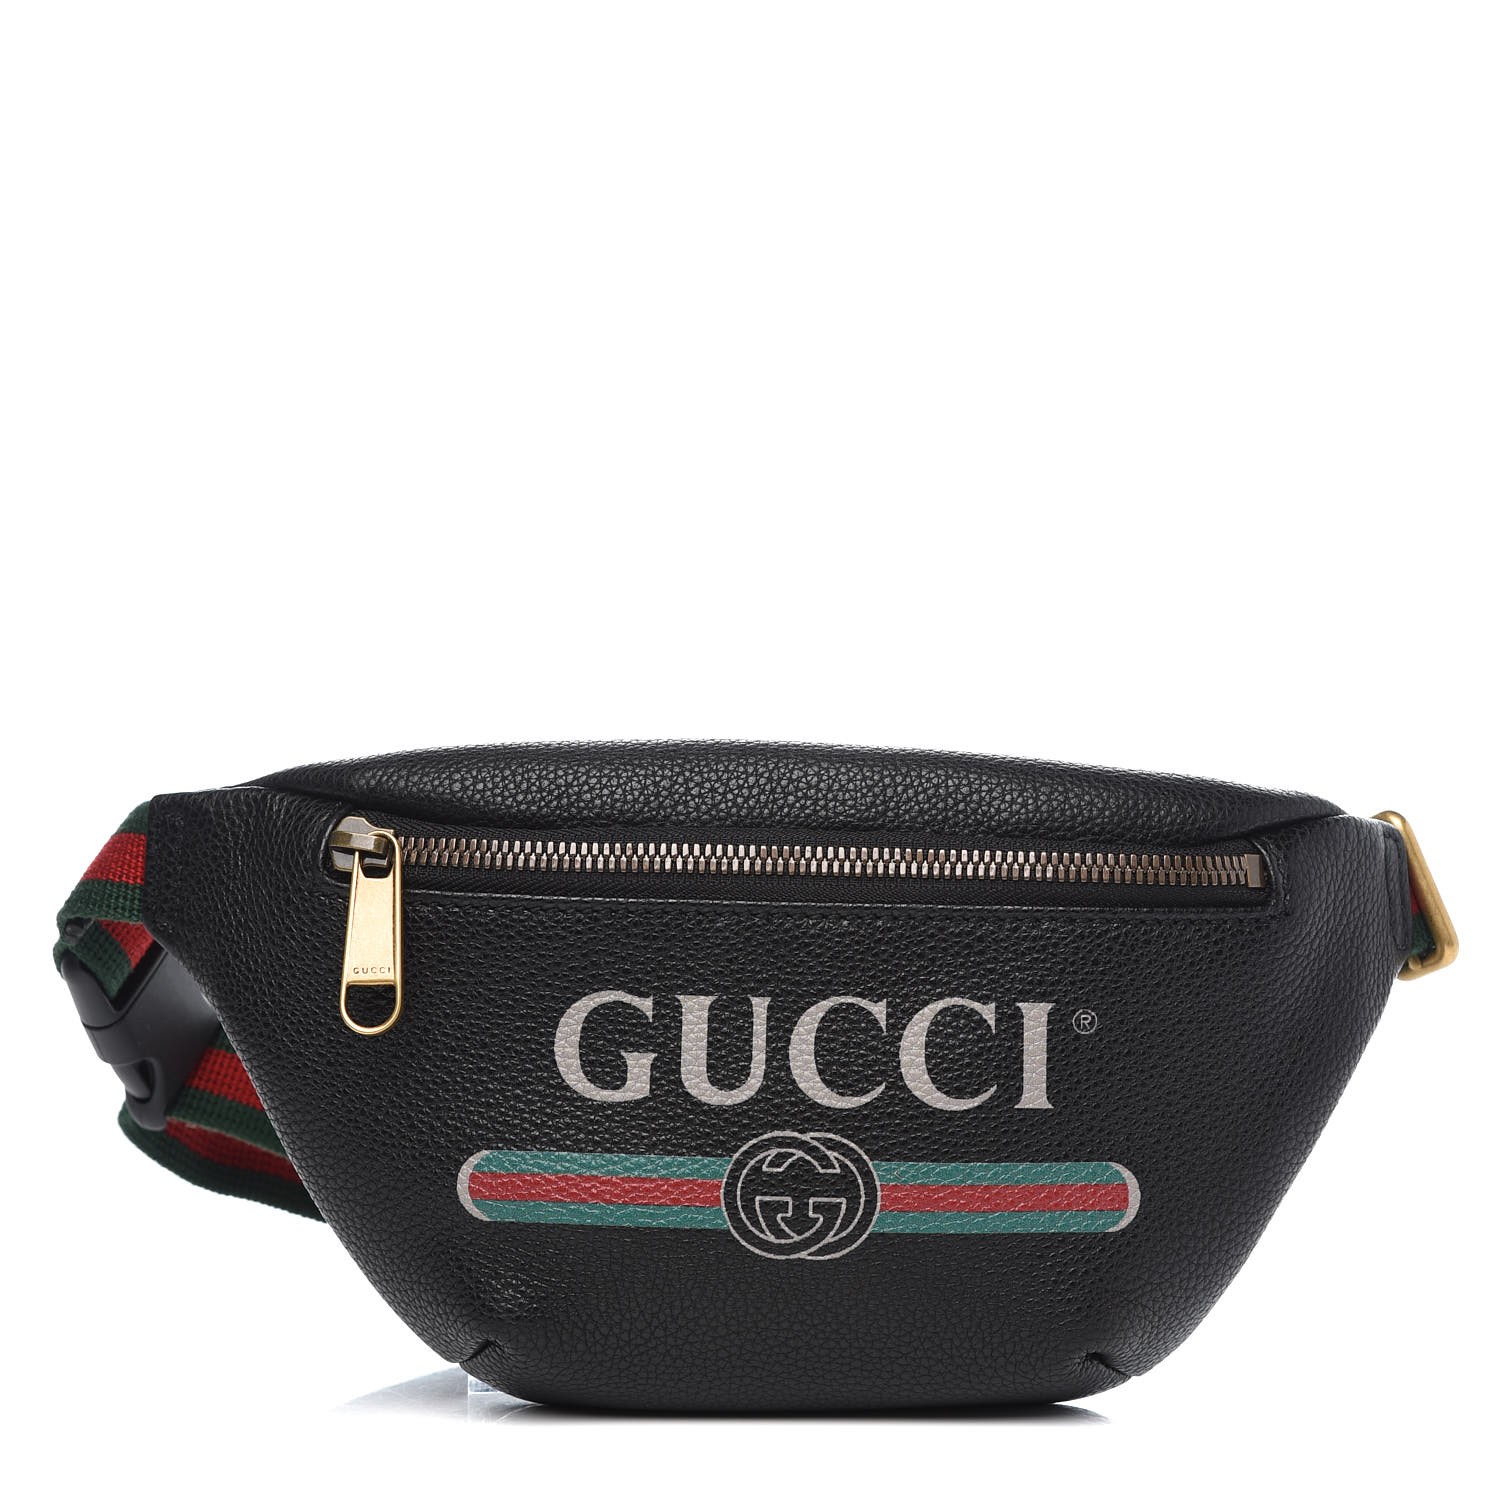 gucci print belt bag size